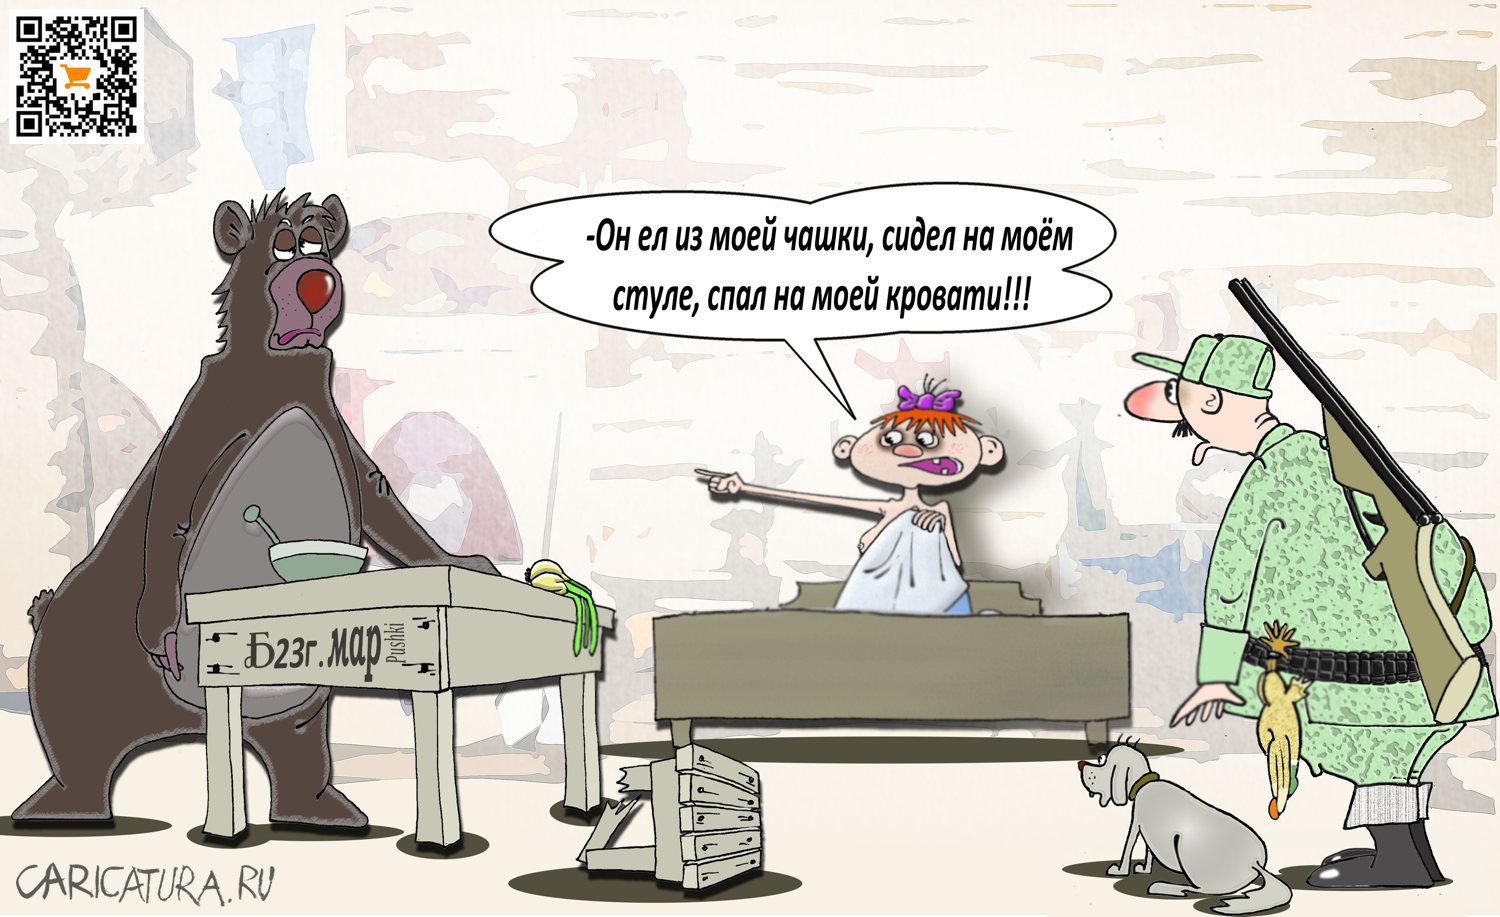 Карикатура "Про Машеньку и Медведя", Борис Демин